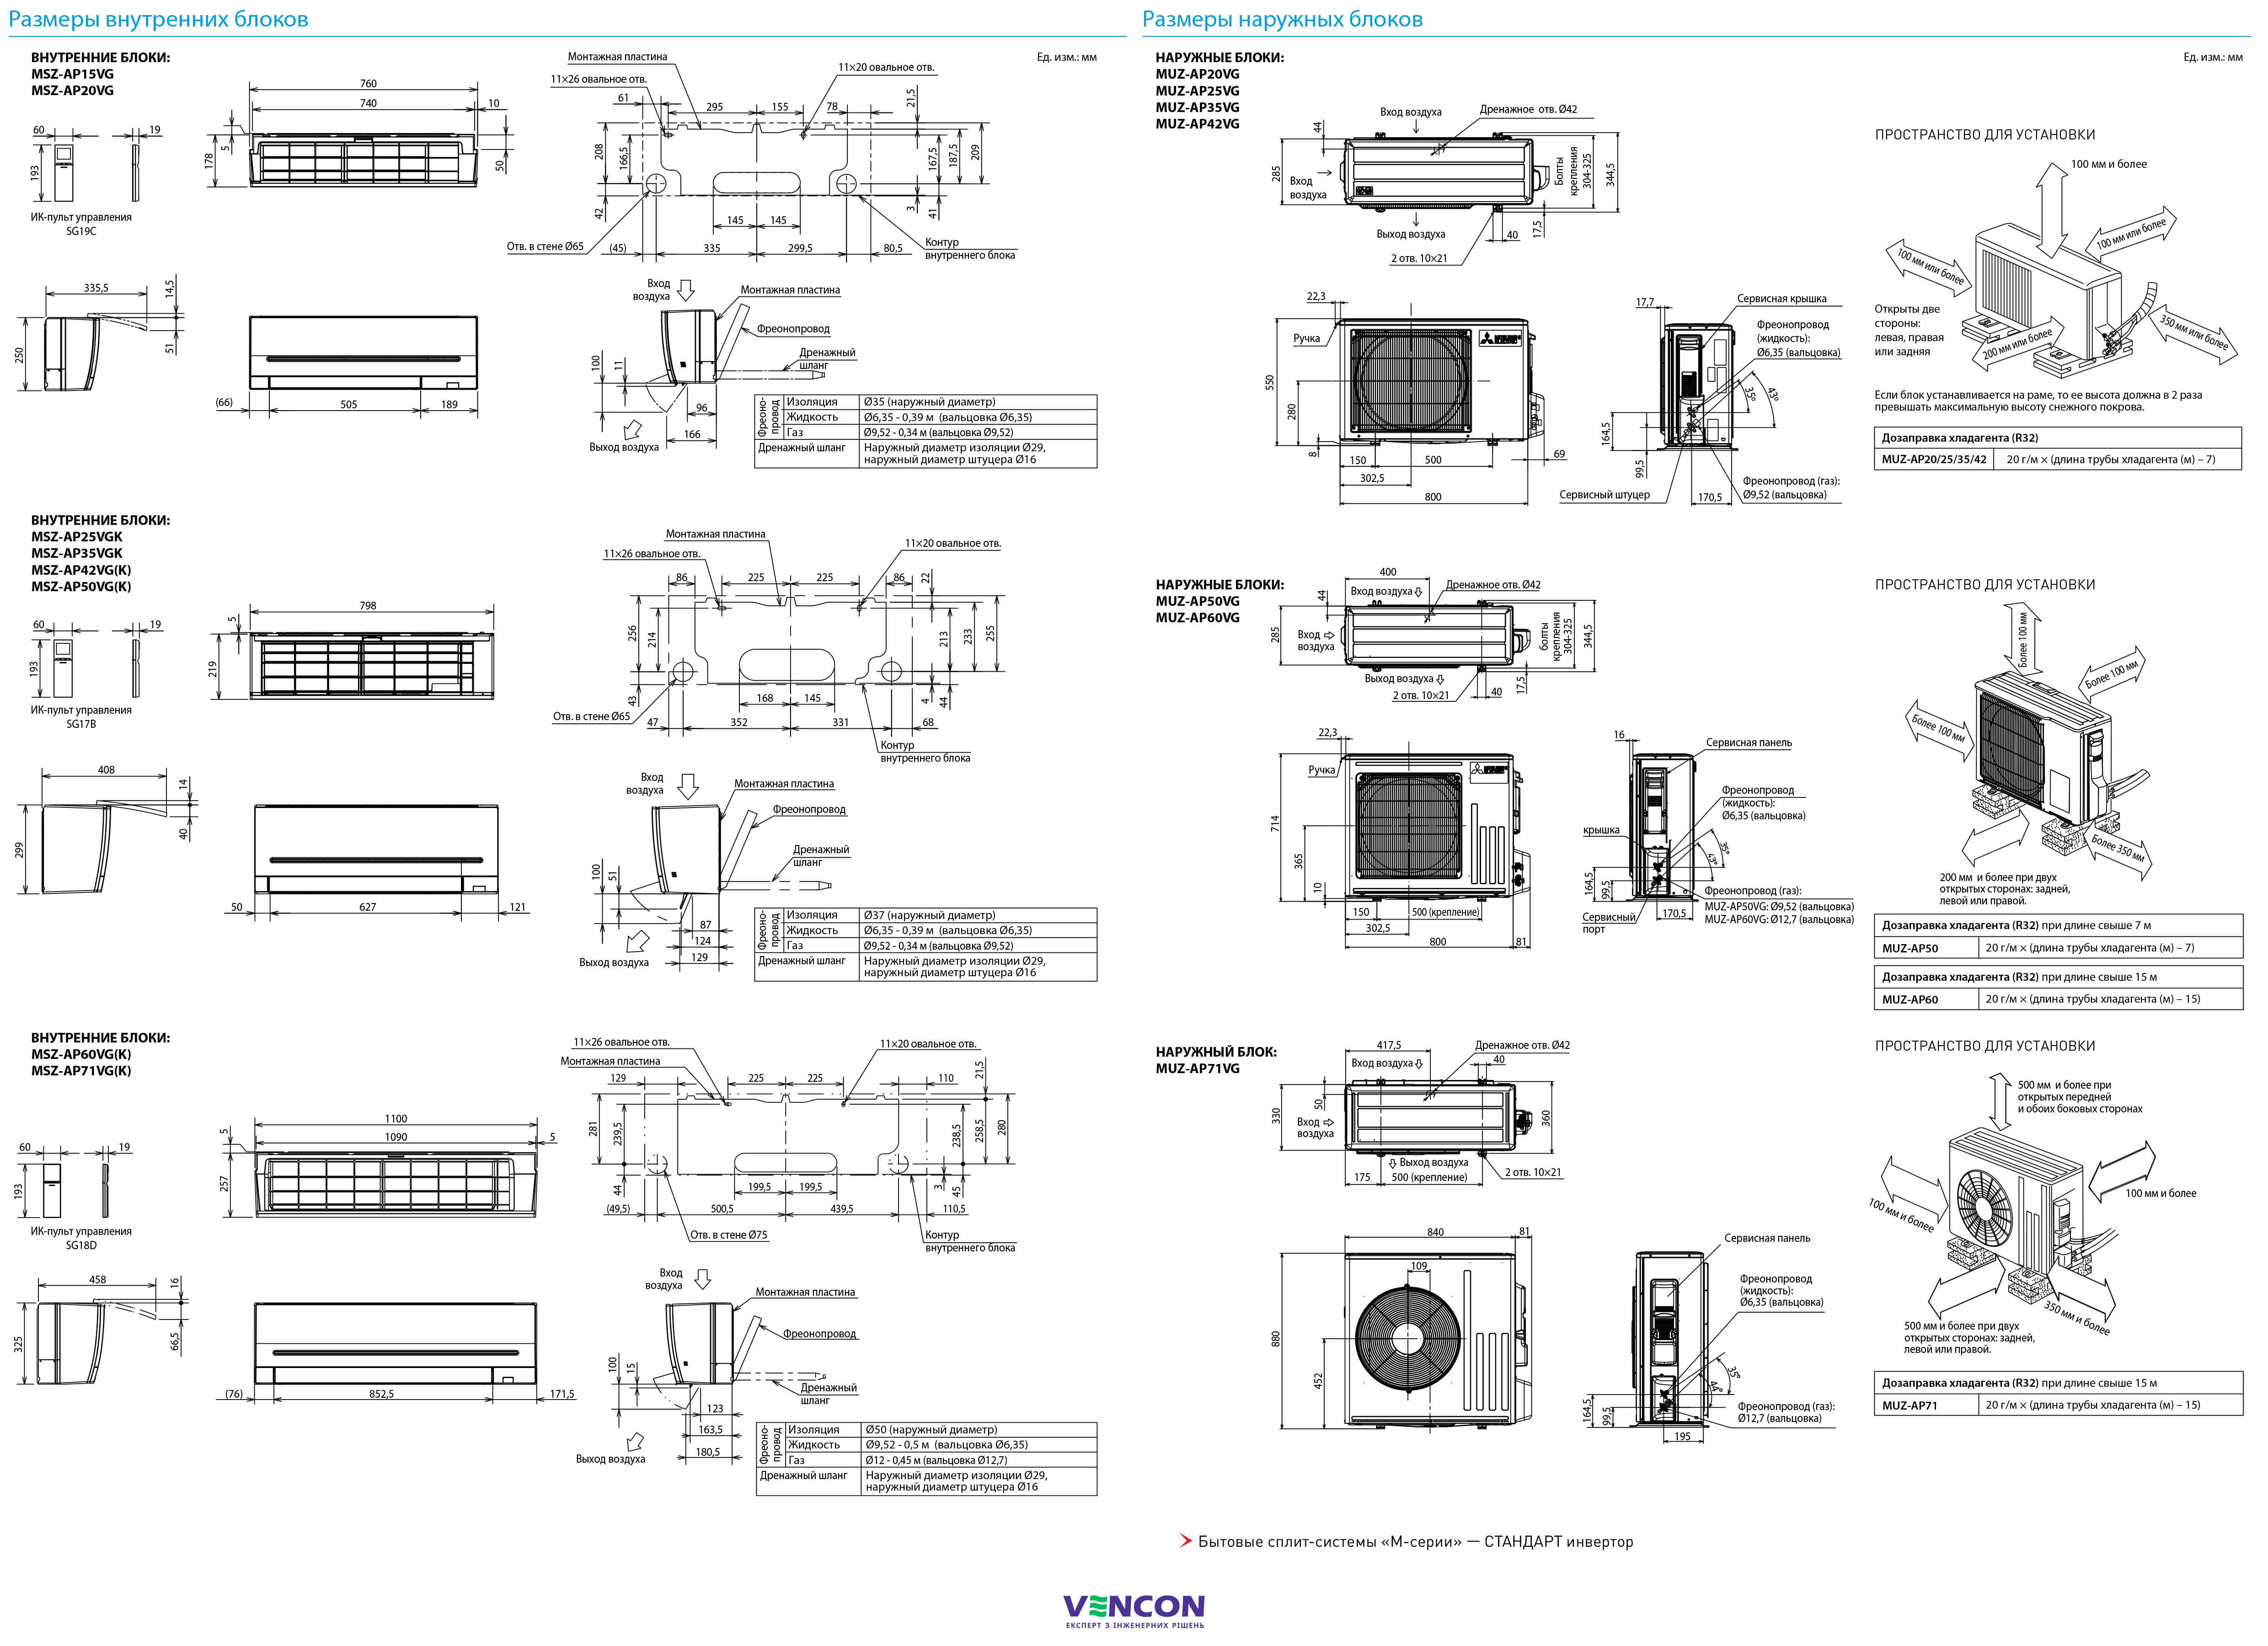 Mitsubishi Electric Standard Inverter MSZ-AP71VG/MUZ-AP71VG Габаритные размеры